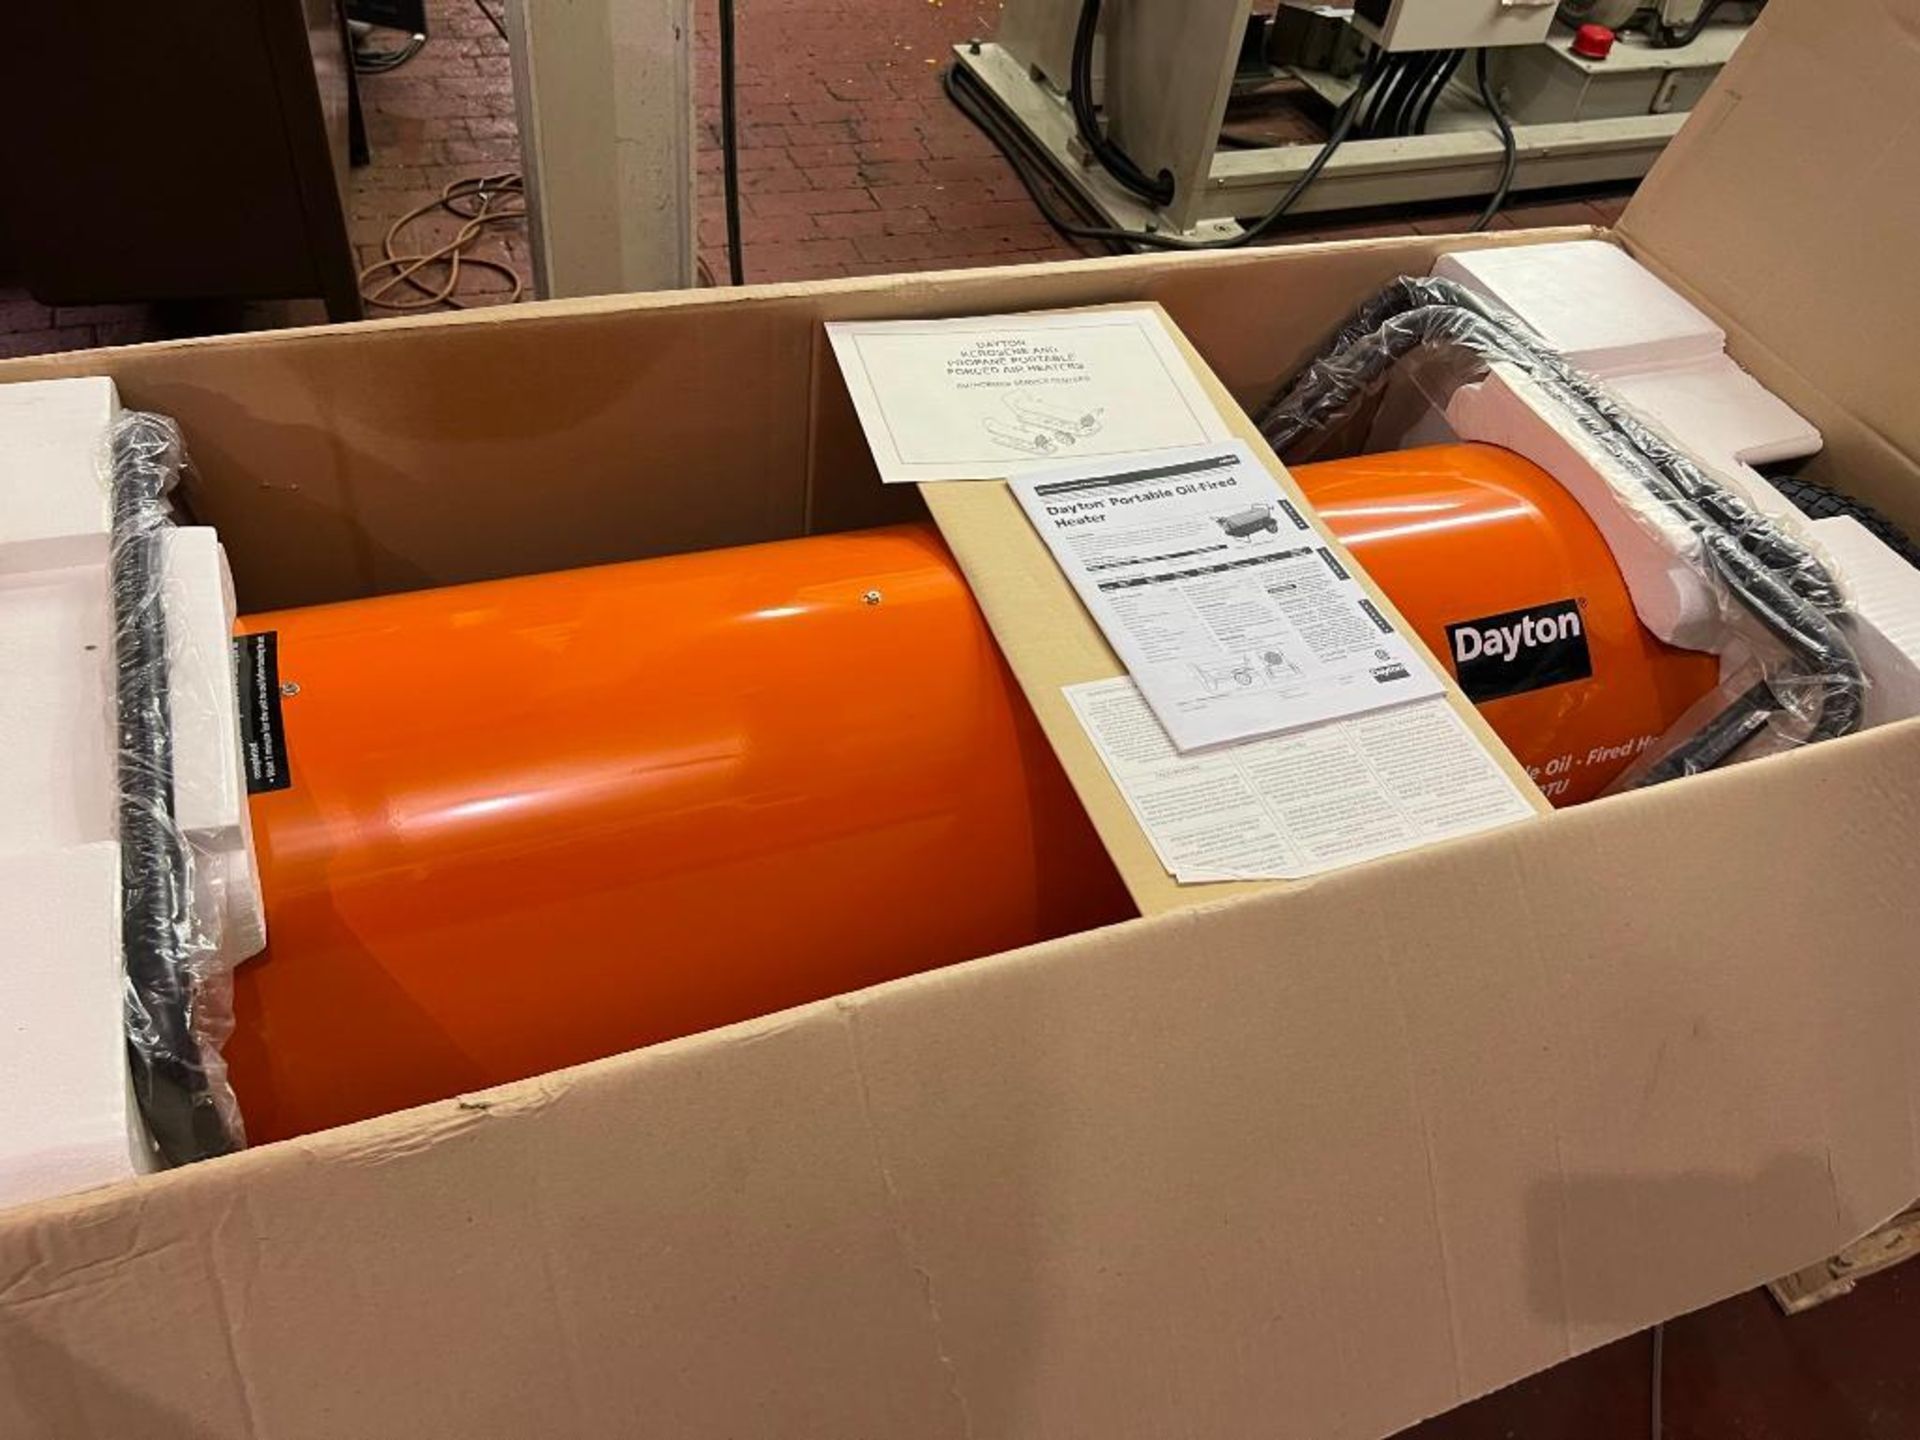 400,000 BTU Dayton Portable Kerosene Fired Heater (New In Box)